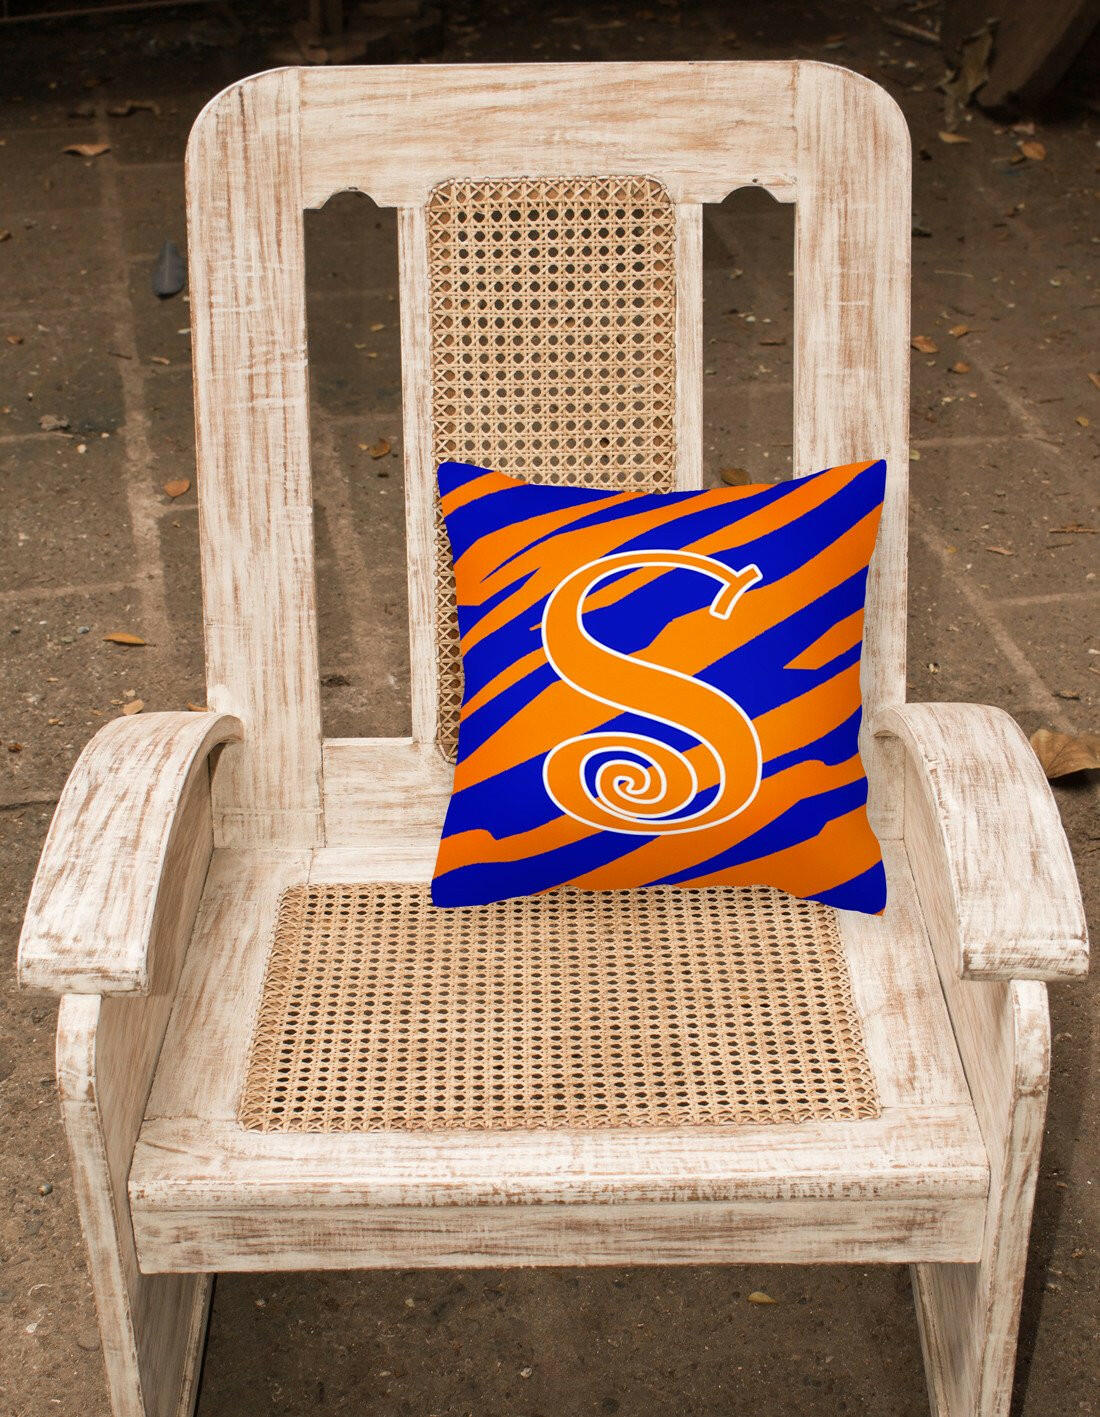 Monogram Initial S Tiger Stripe Blue and Orange Decorative Canvas Fabric Pillow - the-store.com